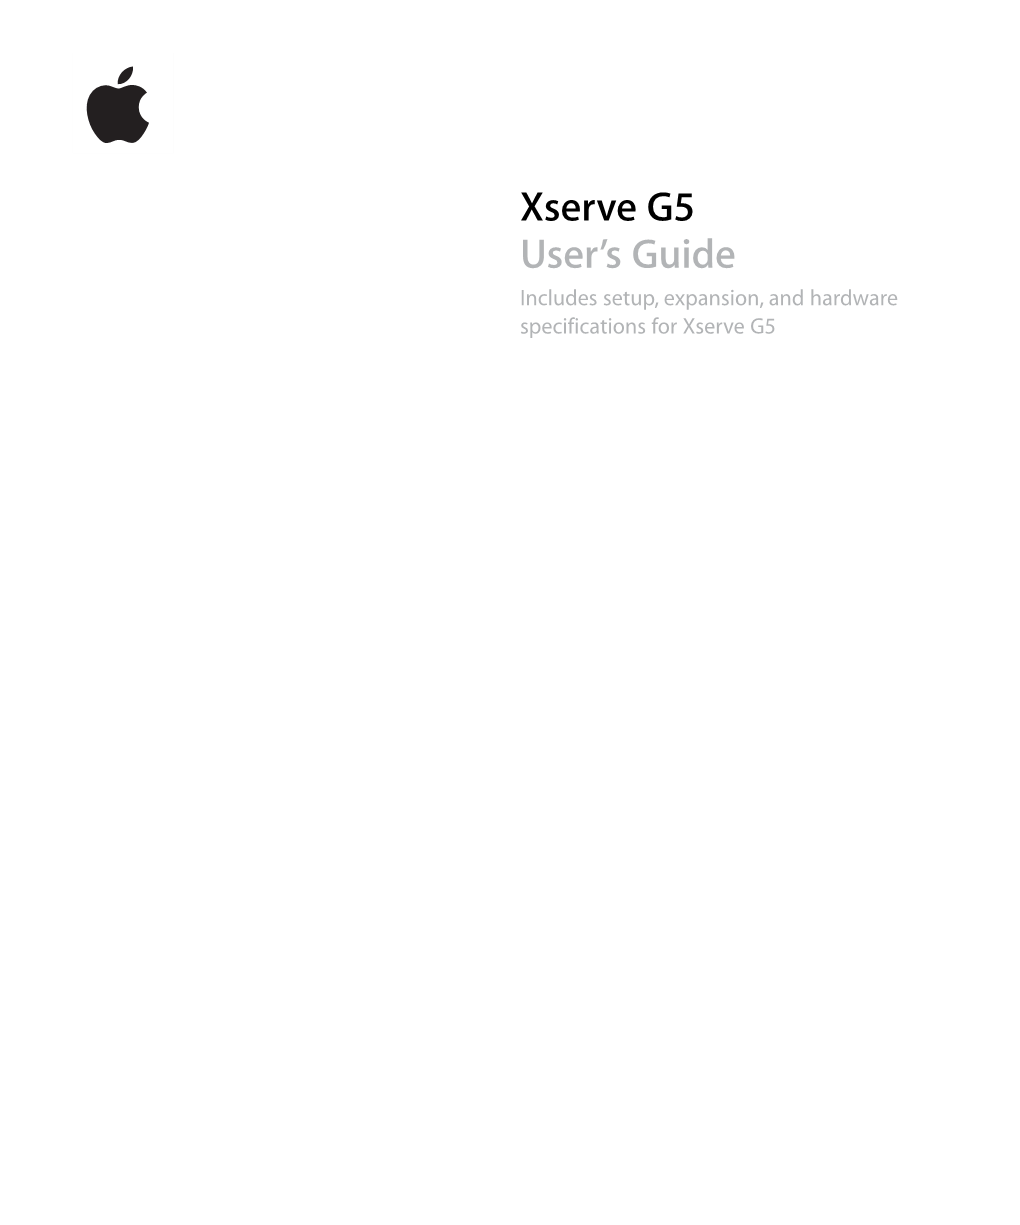 Xserve G5 User's Guide (Manual)